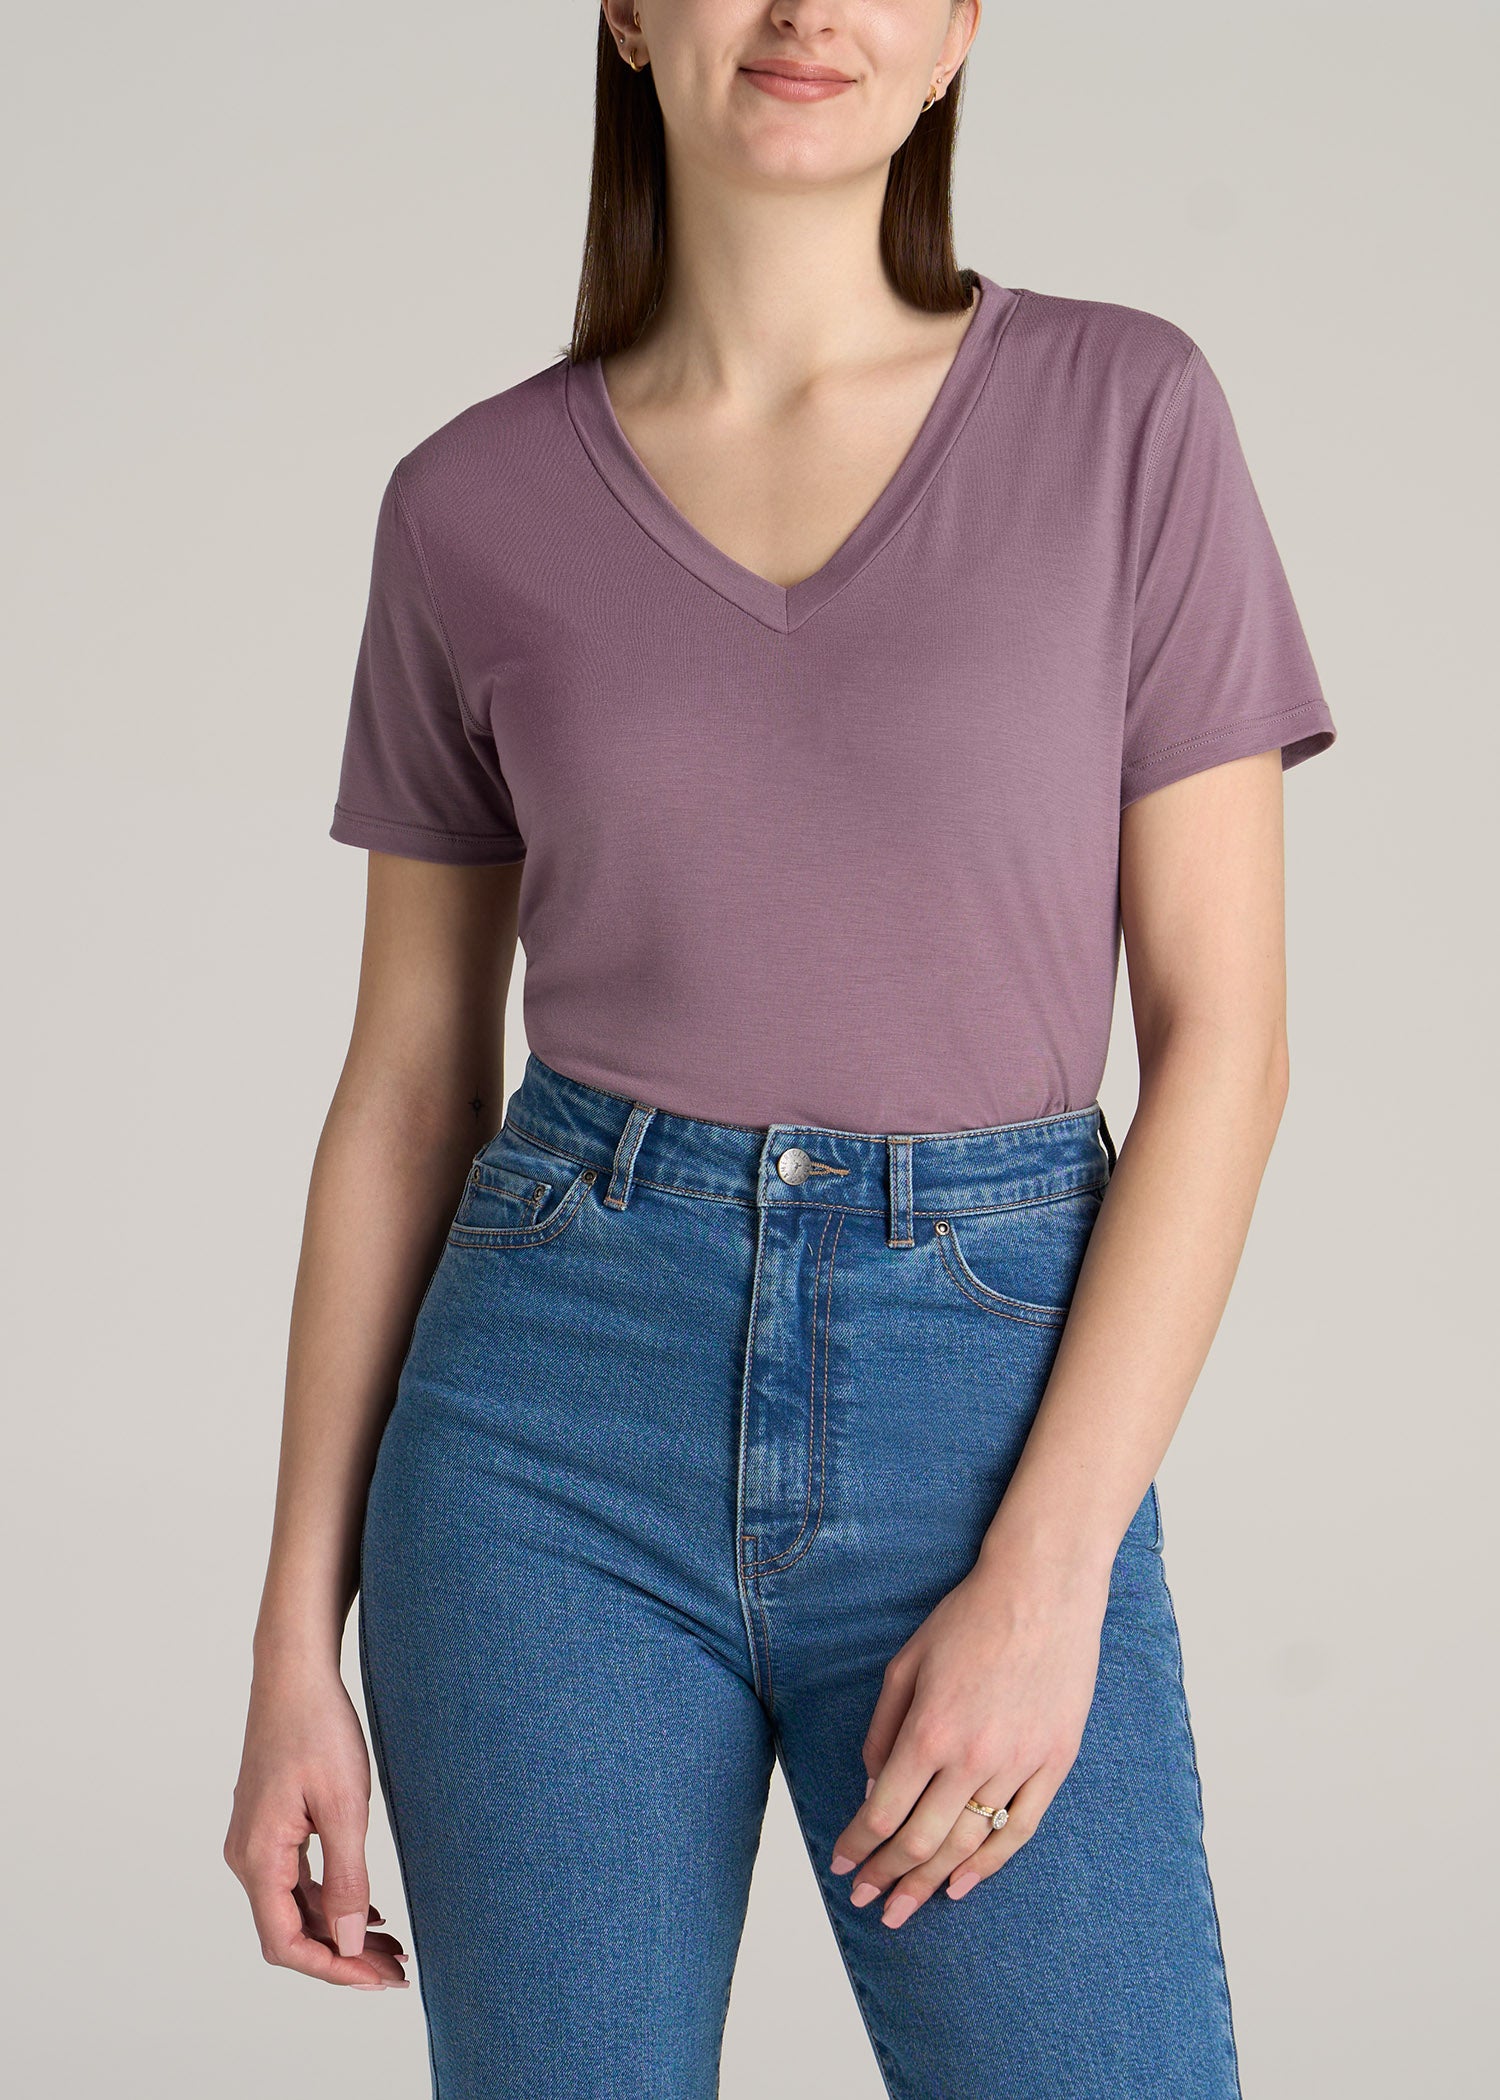 Short Sleeve V-Neck Smoked Mauve - Shirts For Tall Women